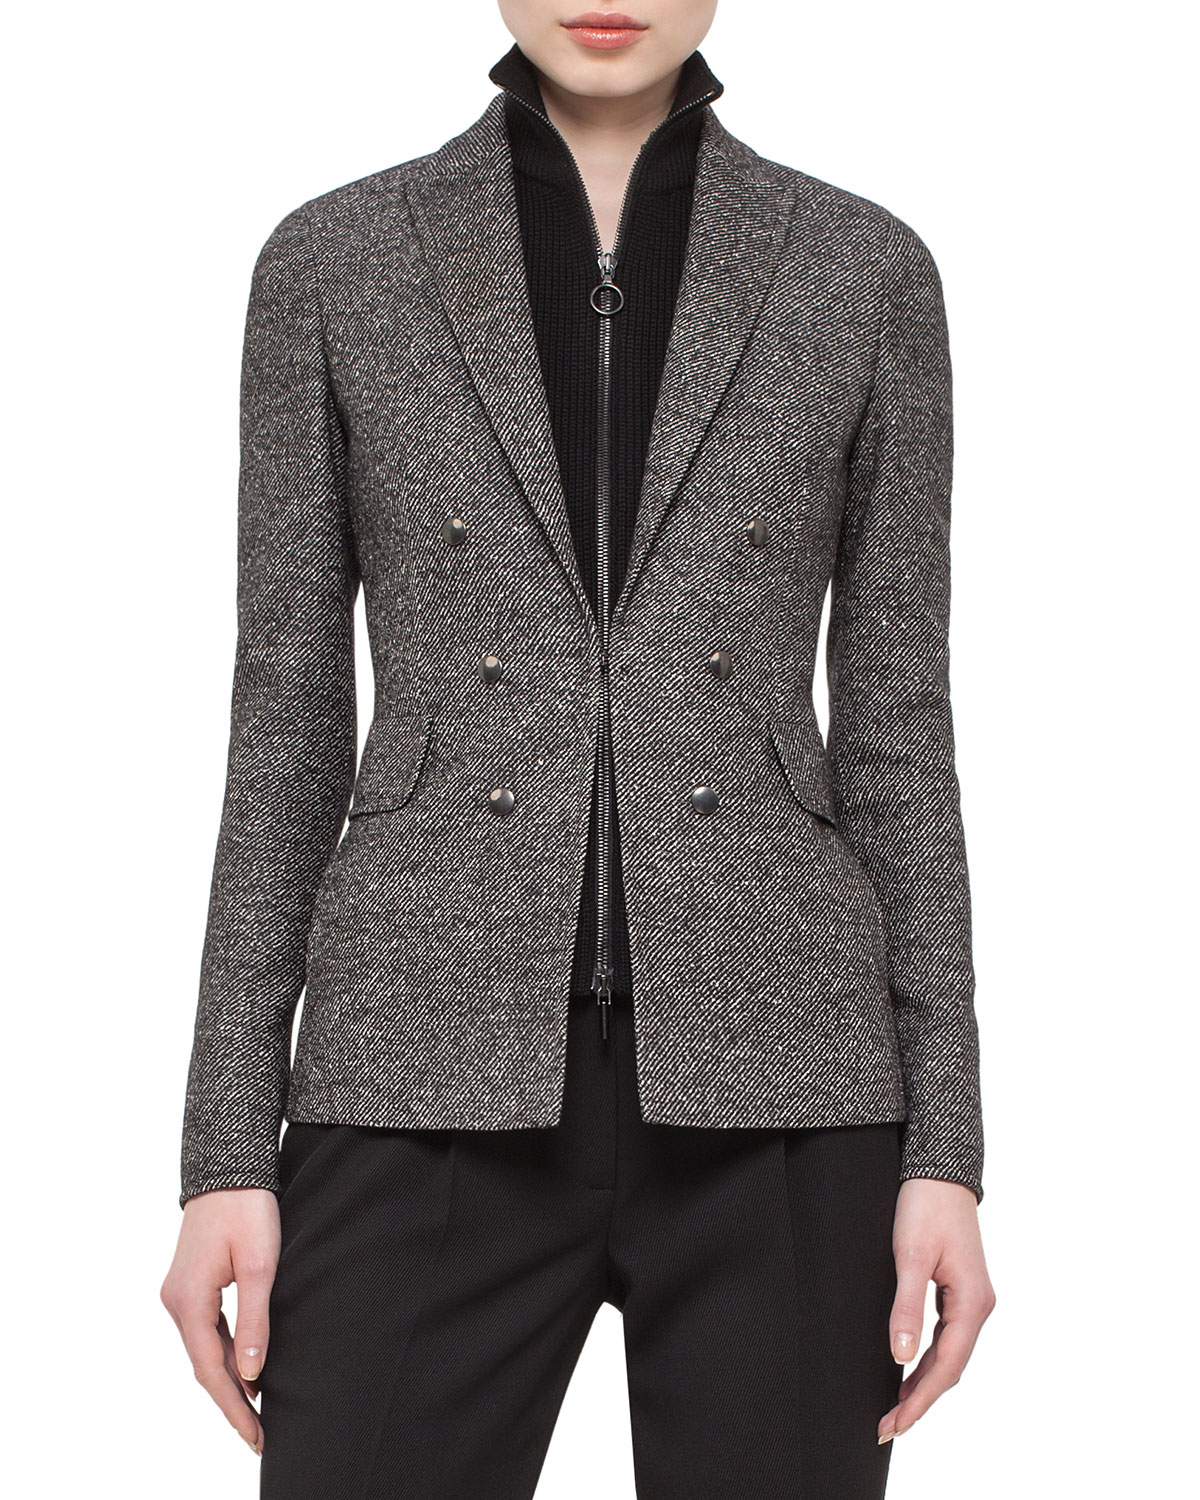 Tweed Hook-Front Jacket, Black/Cream